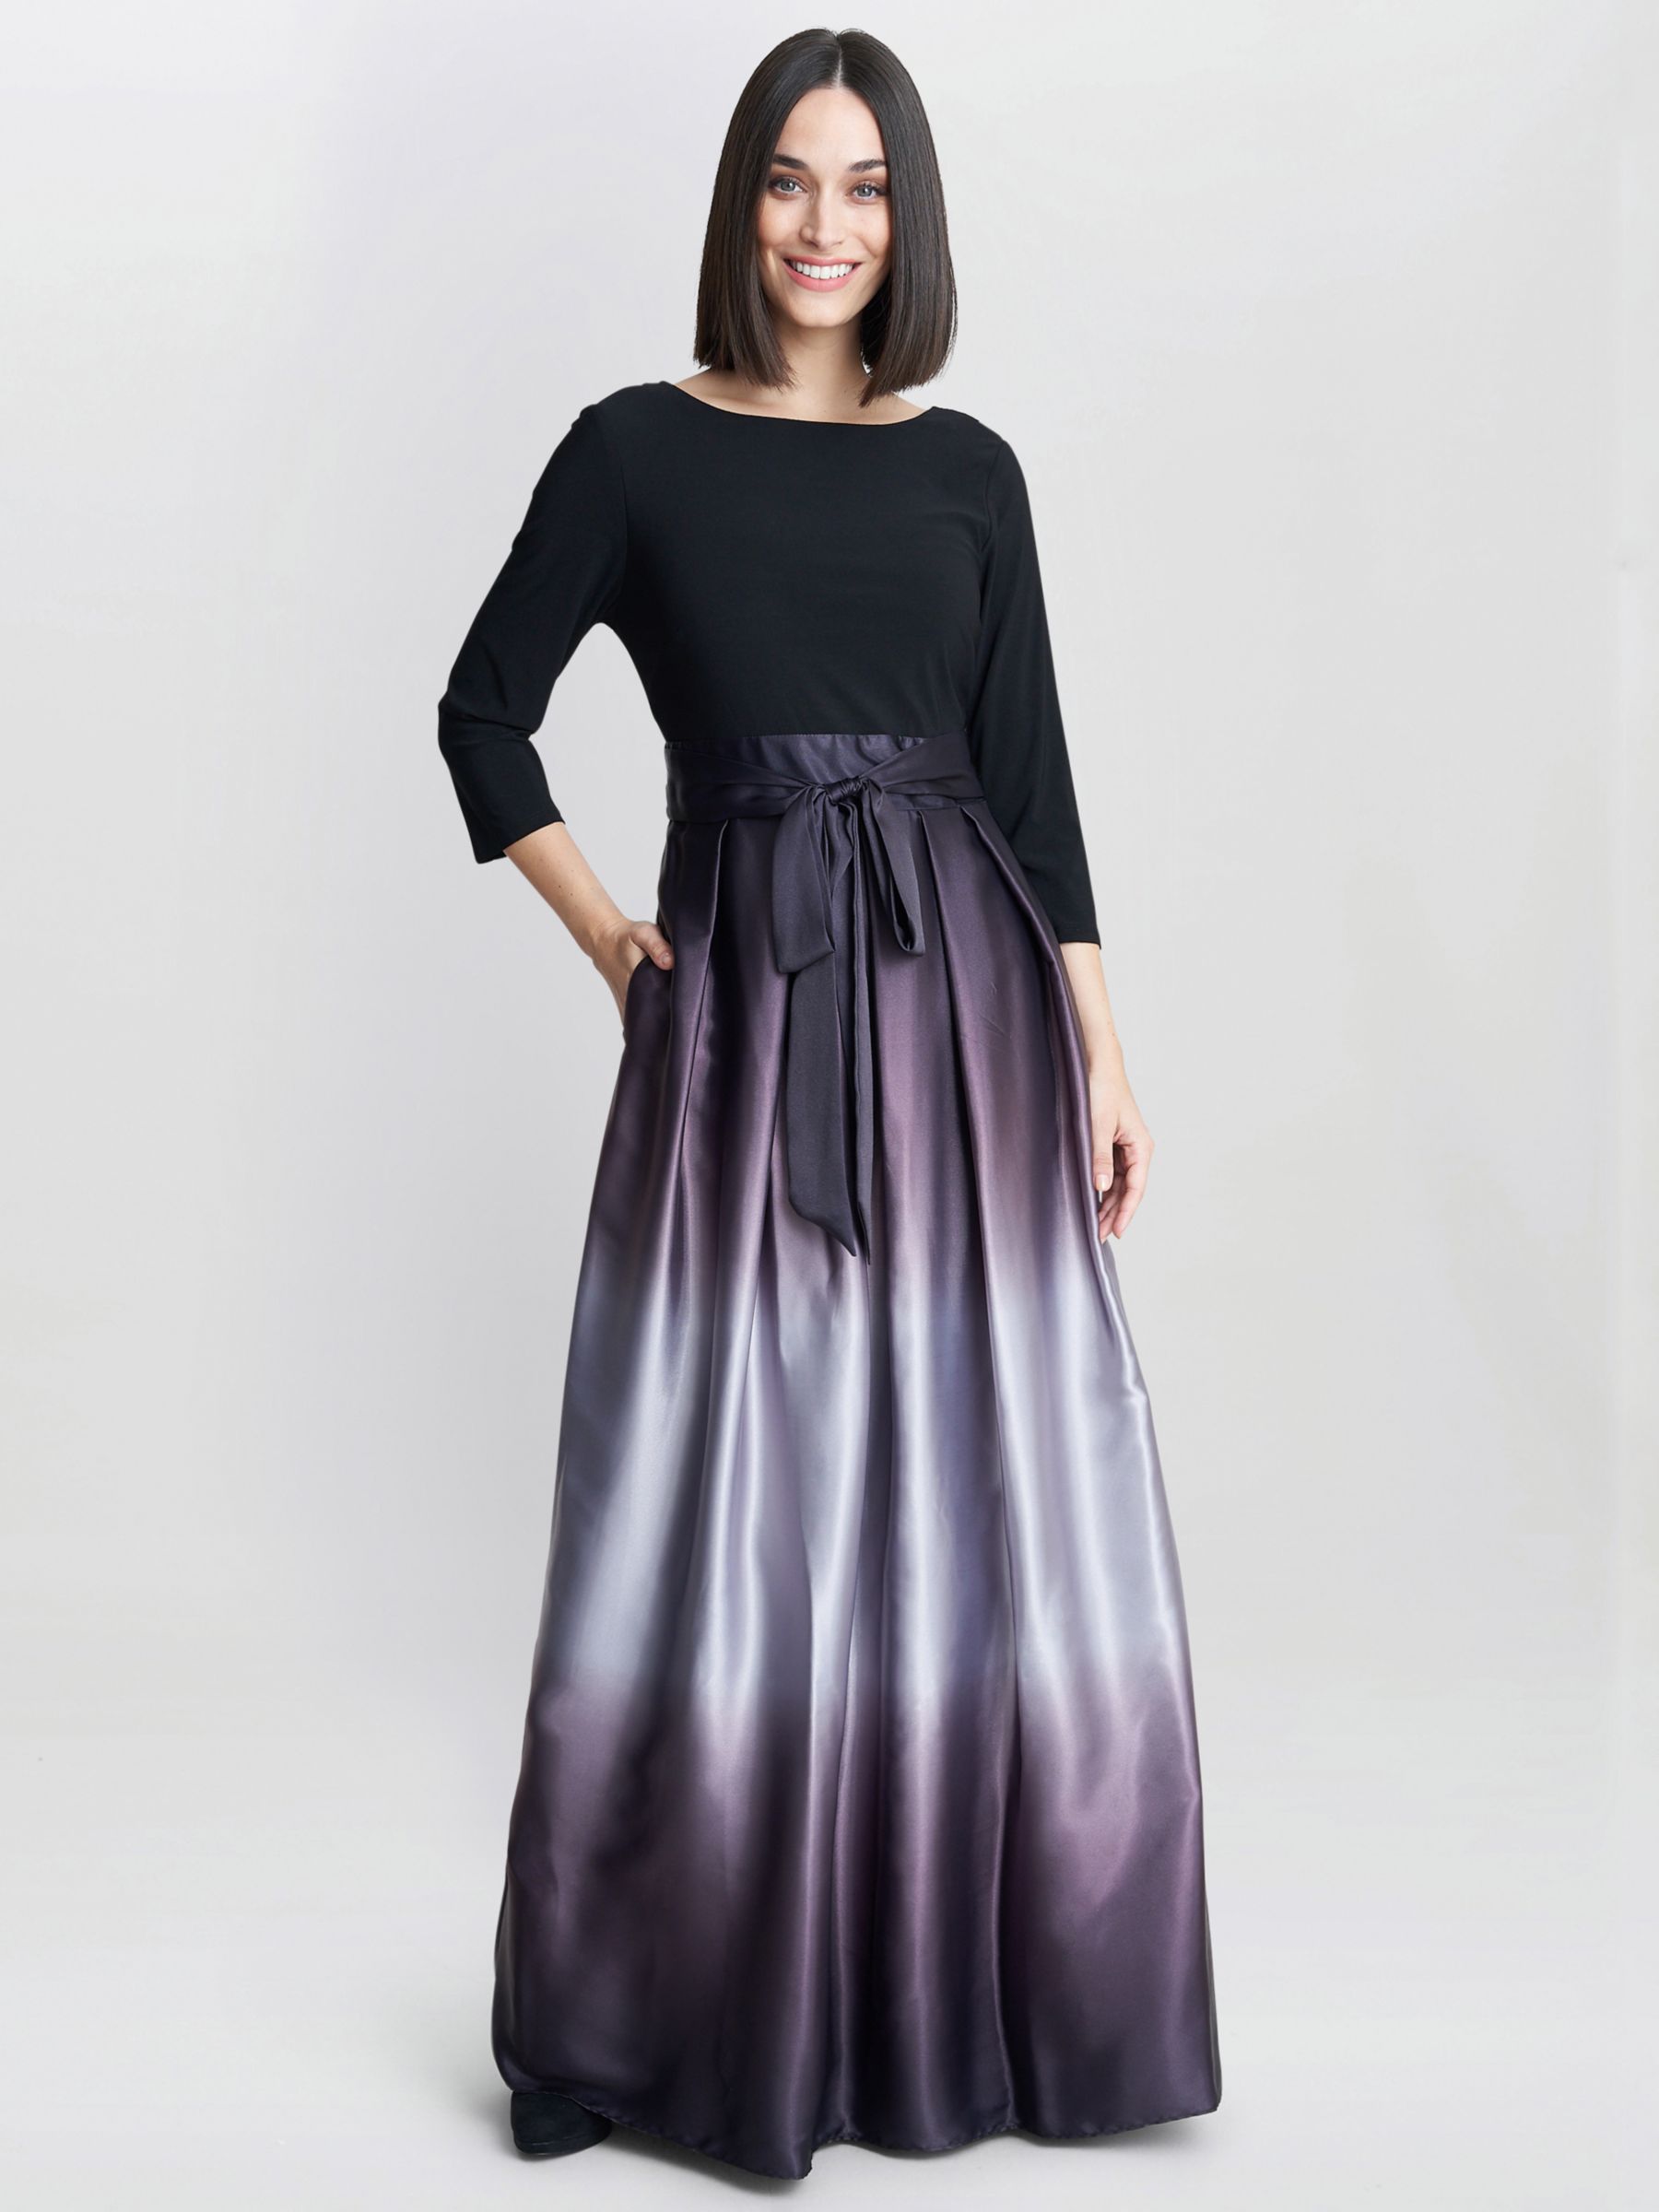 Gina Bacconi Ingrid V Neck Back Ombre Satin Maxi Dress, Black/Silver, 10